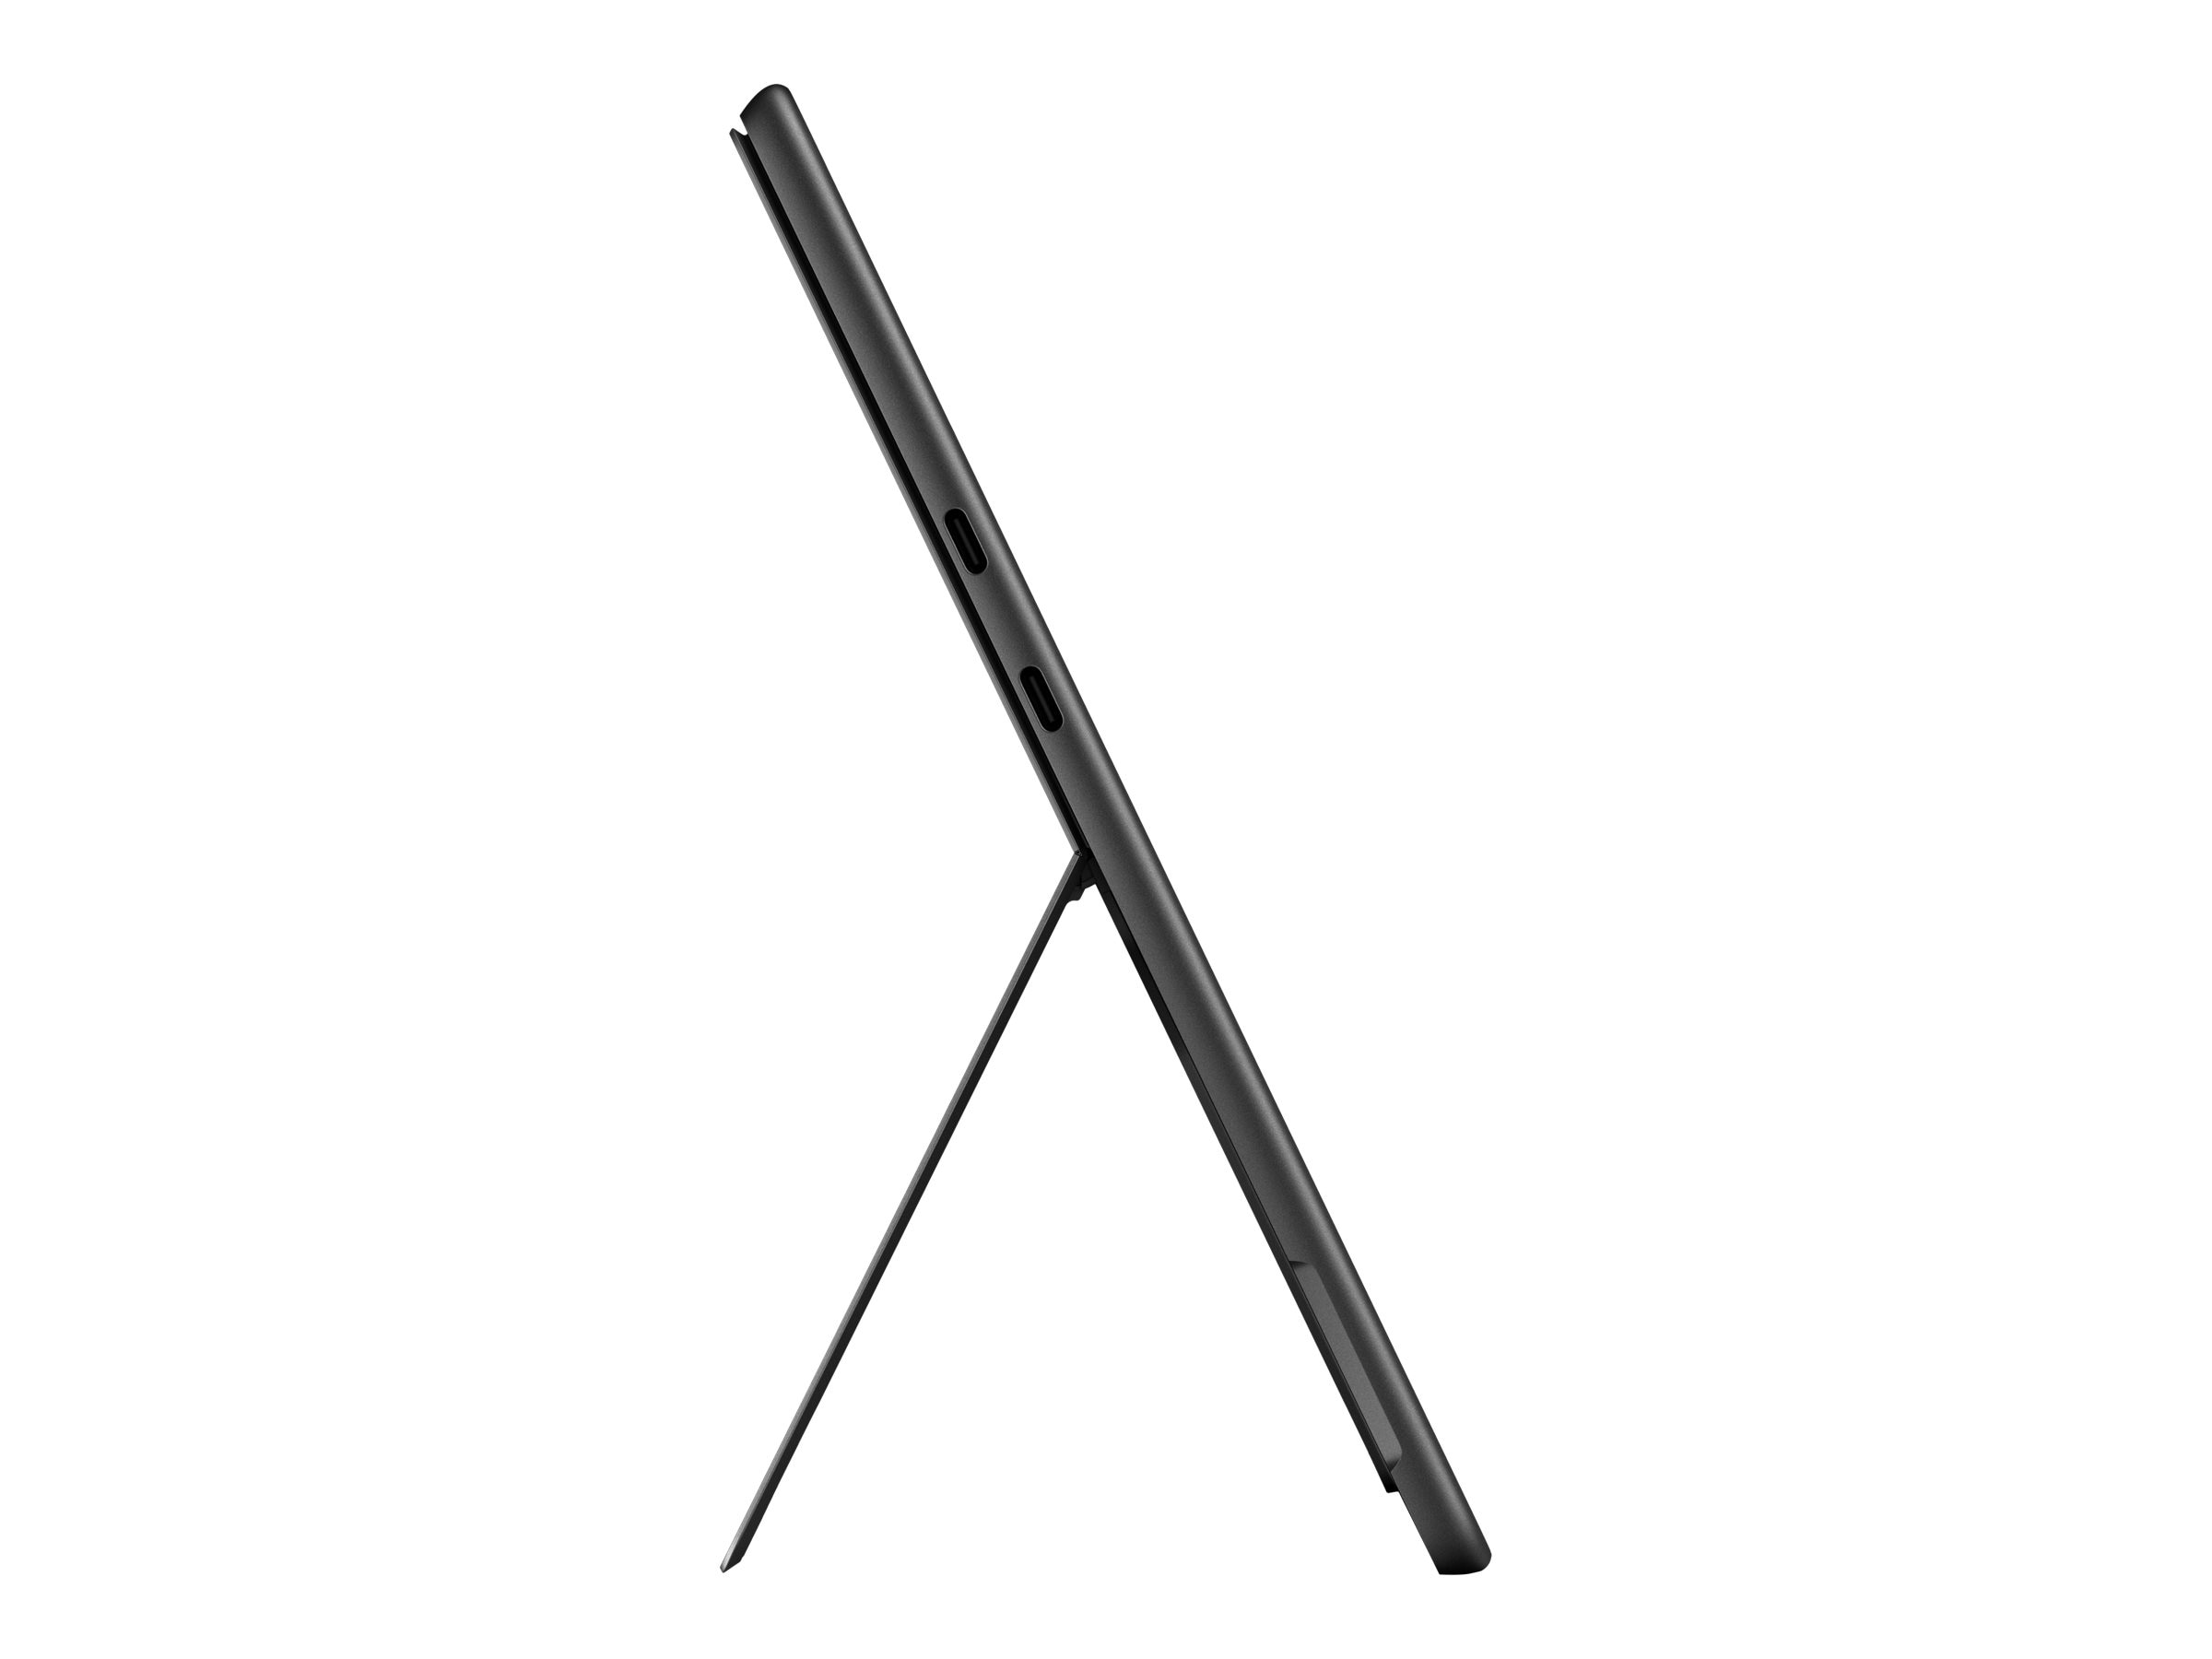 Microsoft Surface Pro 9 i7 16/512GB Win 10 Pro Platinum (S8N-00018) купить  в интернет-магазине: цены на планшет Surface Pro 9 i7 16/512GB Win 10 Pro  Platinum (S8N-00018) - отзывы и обзоры, фото